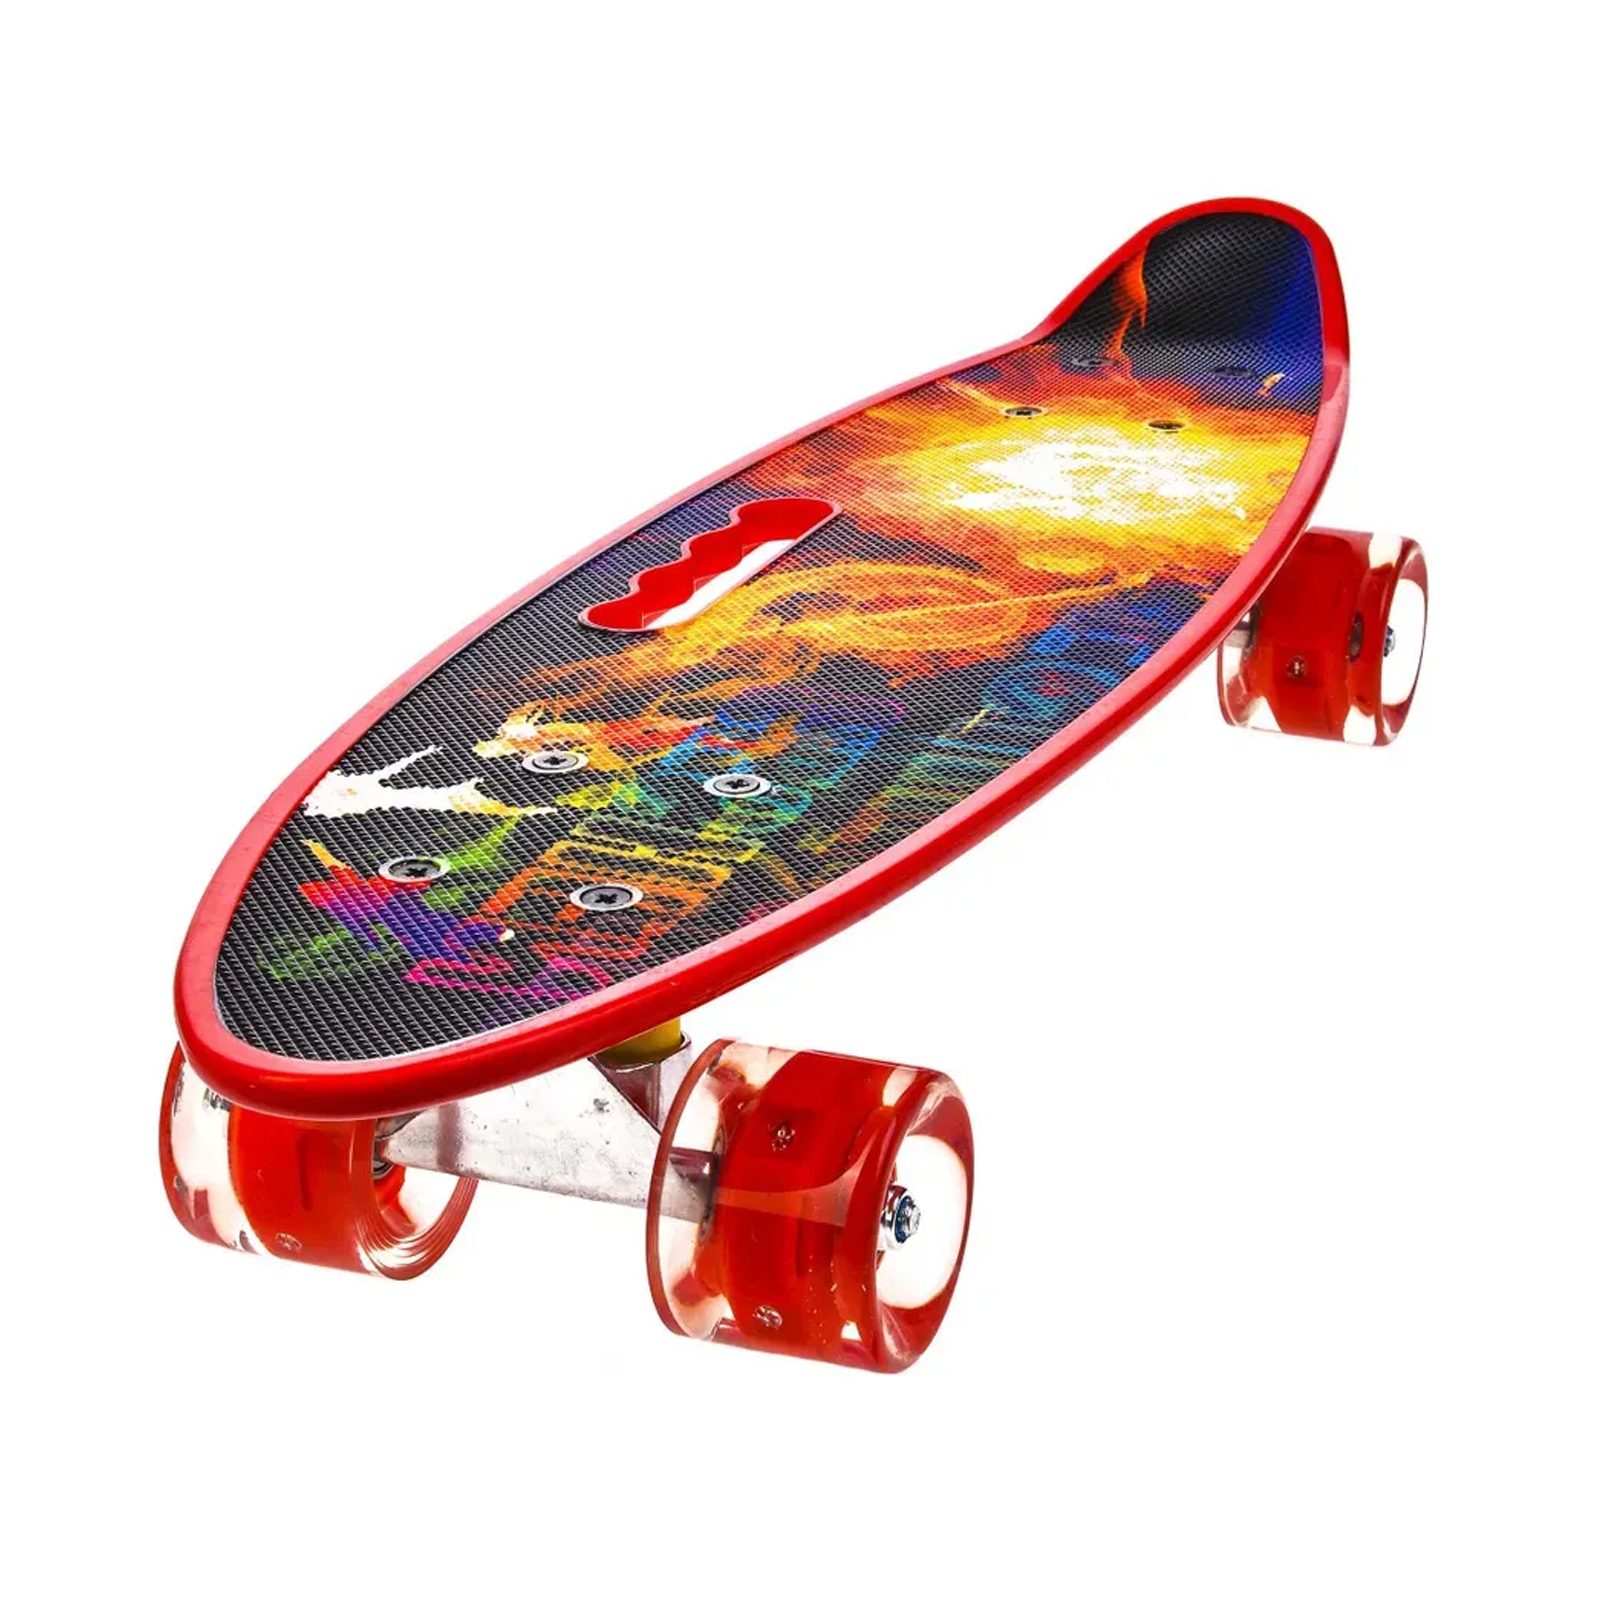 Пенни борд Market toys lab с ручкой круизер со светящимися колесами скейтборд ridex круизер blueberry ут 00018546